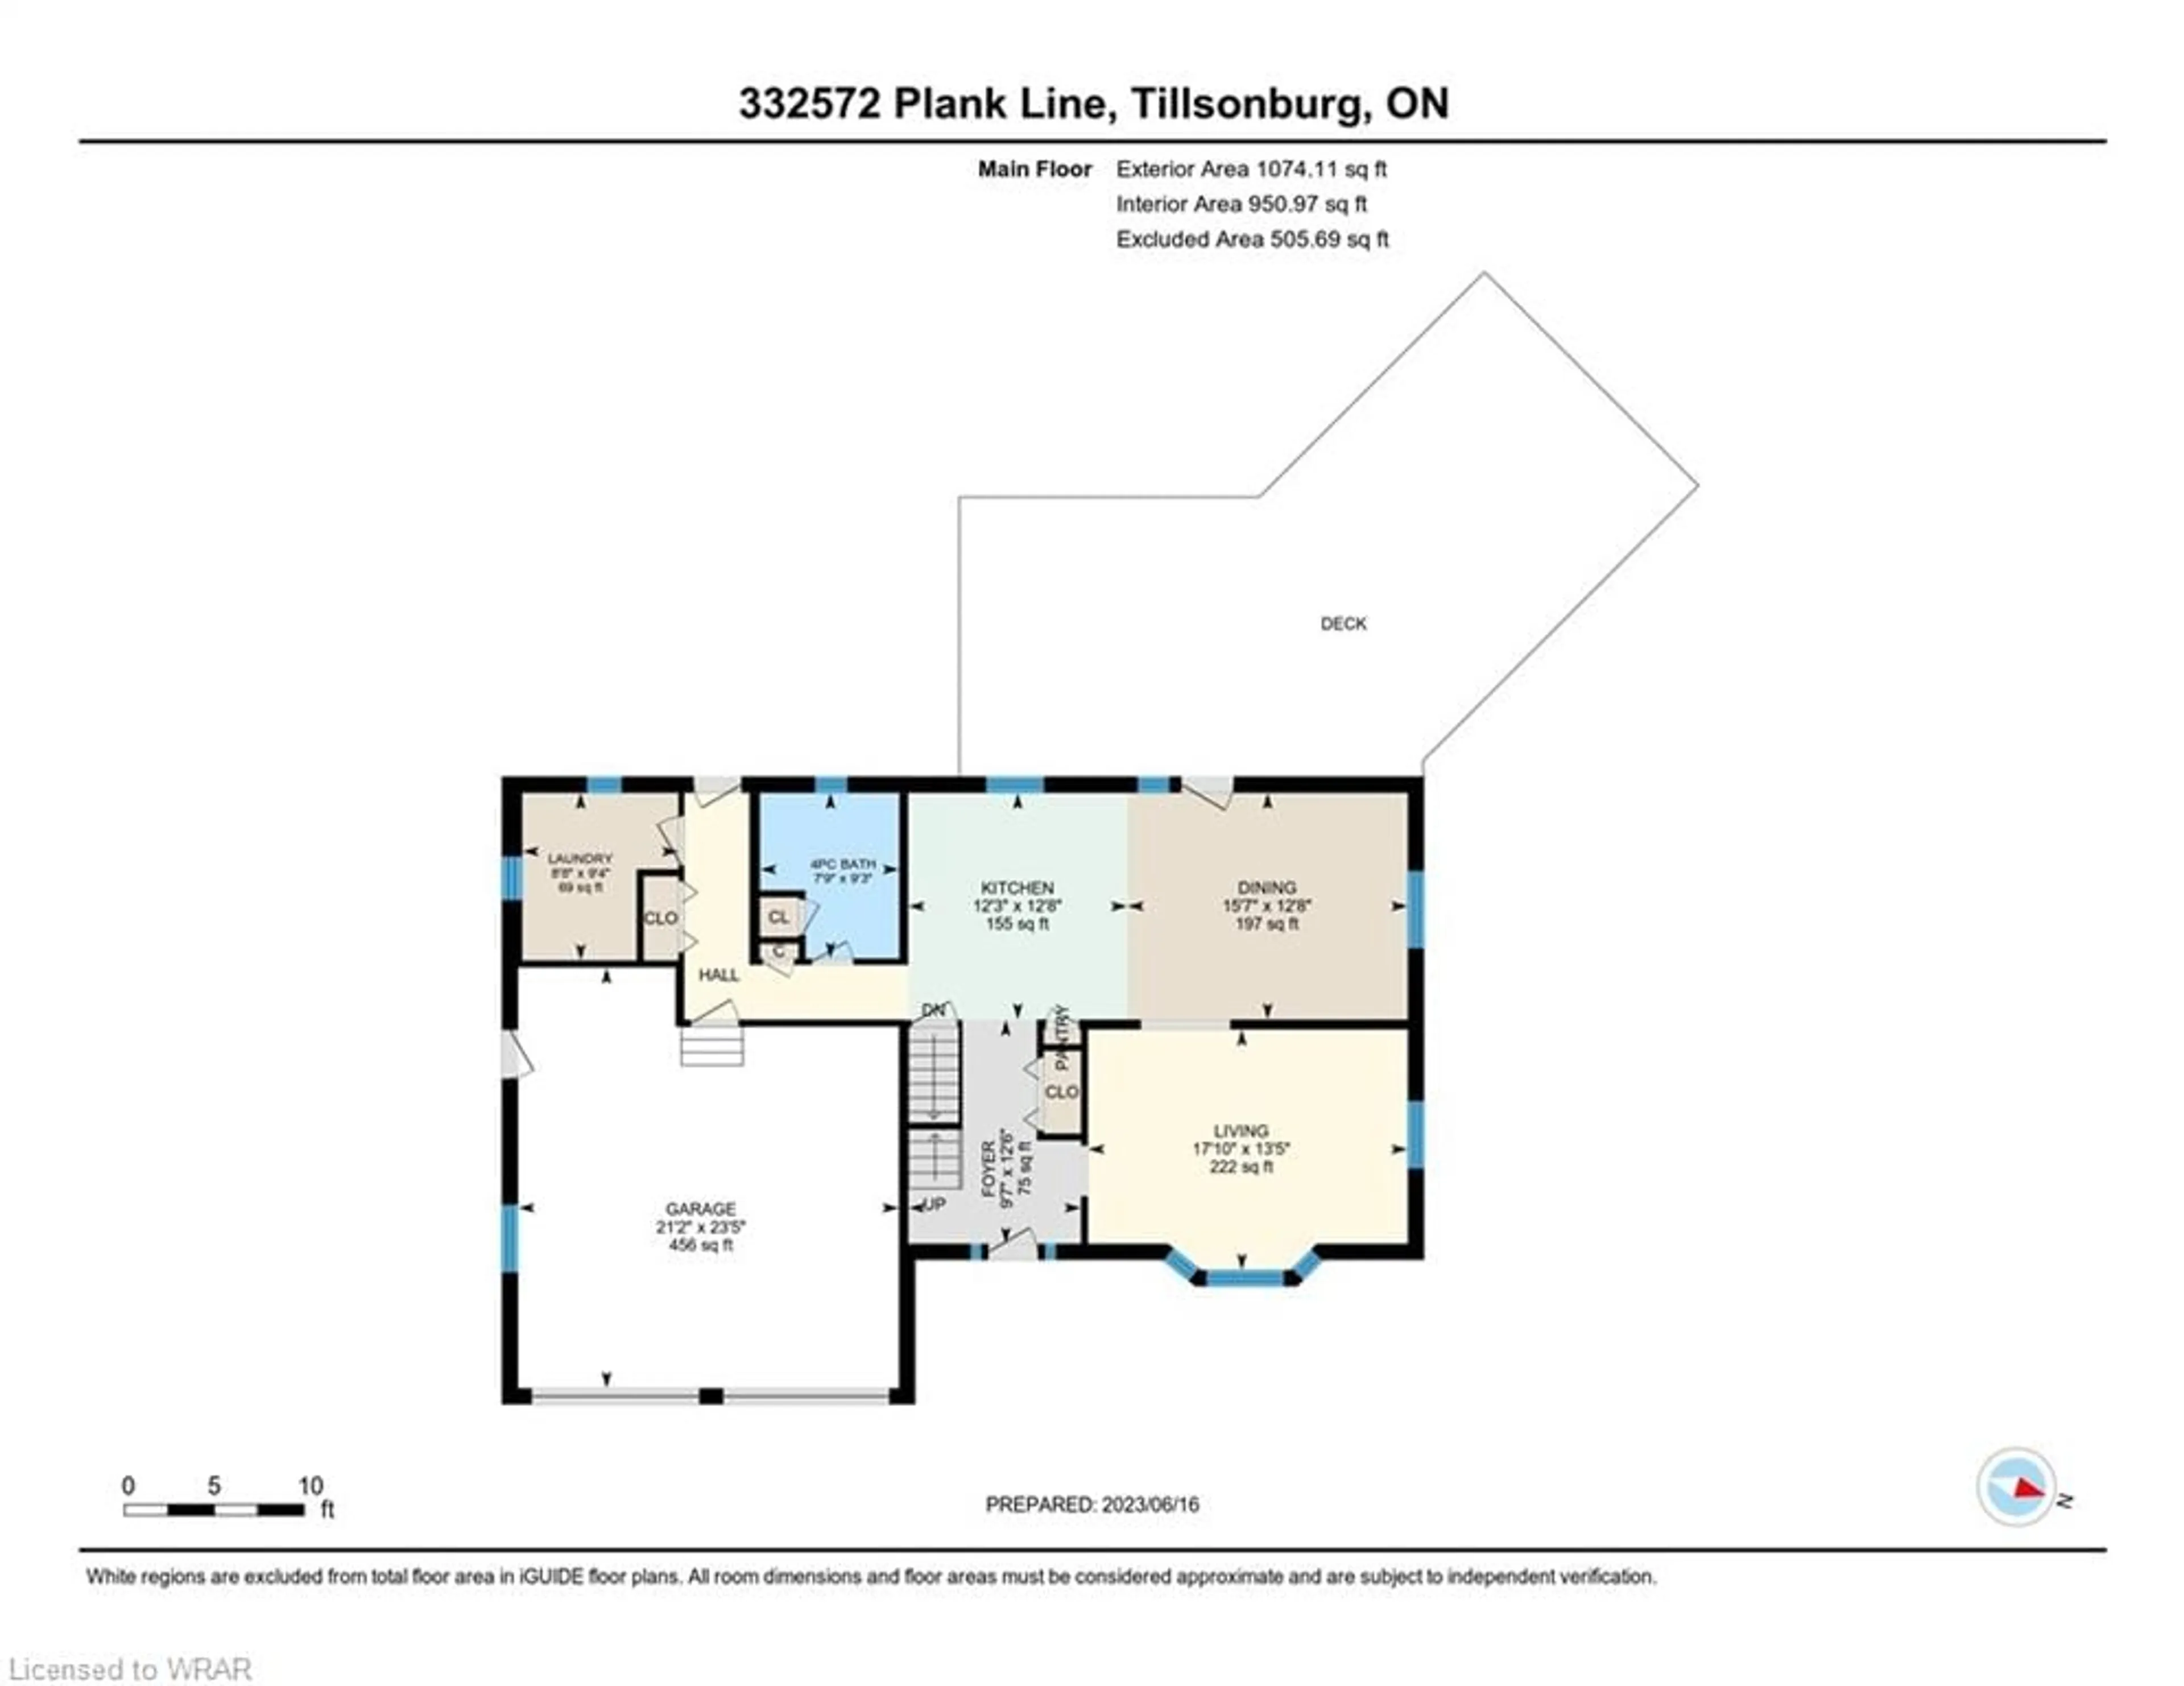 Floor plan for 332572 Plank Line, Ostrander Ontario N4G 4H1